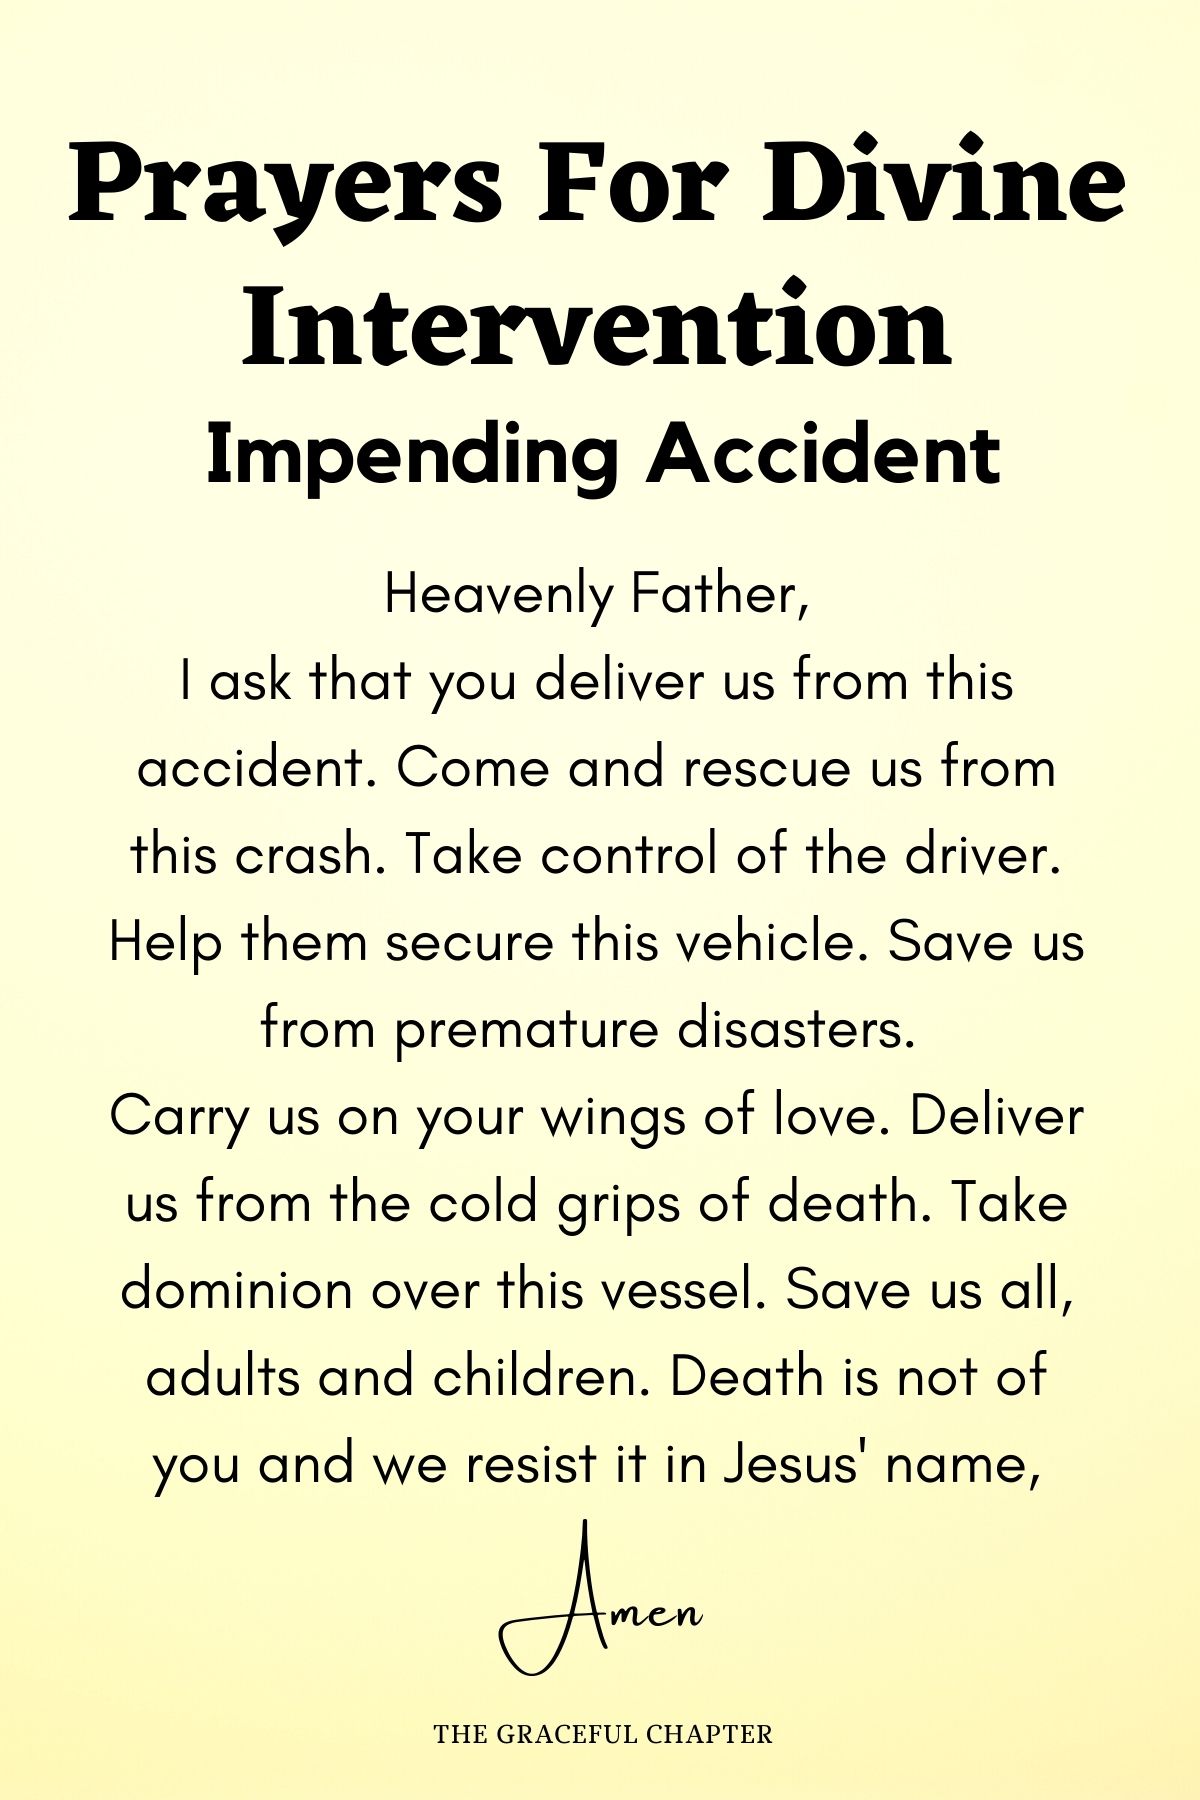 Prayer for divine intervention Impending accident